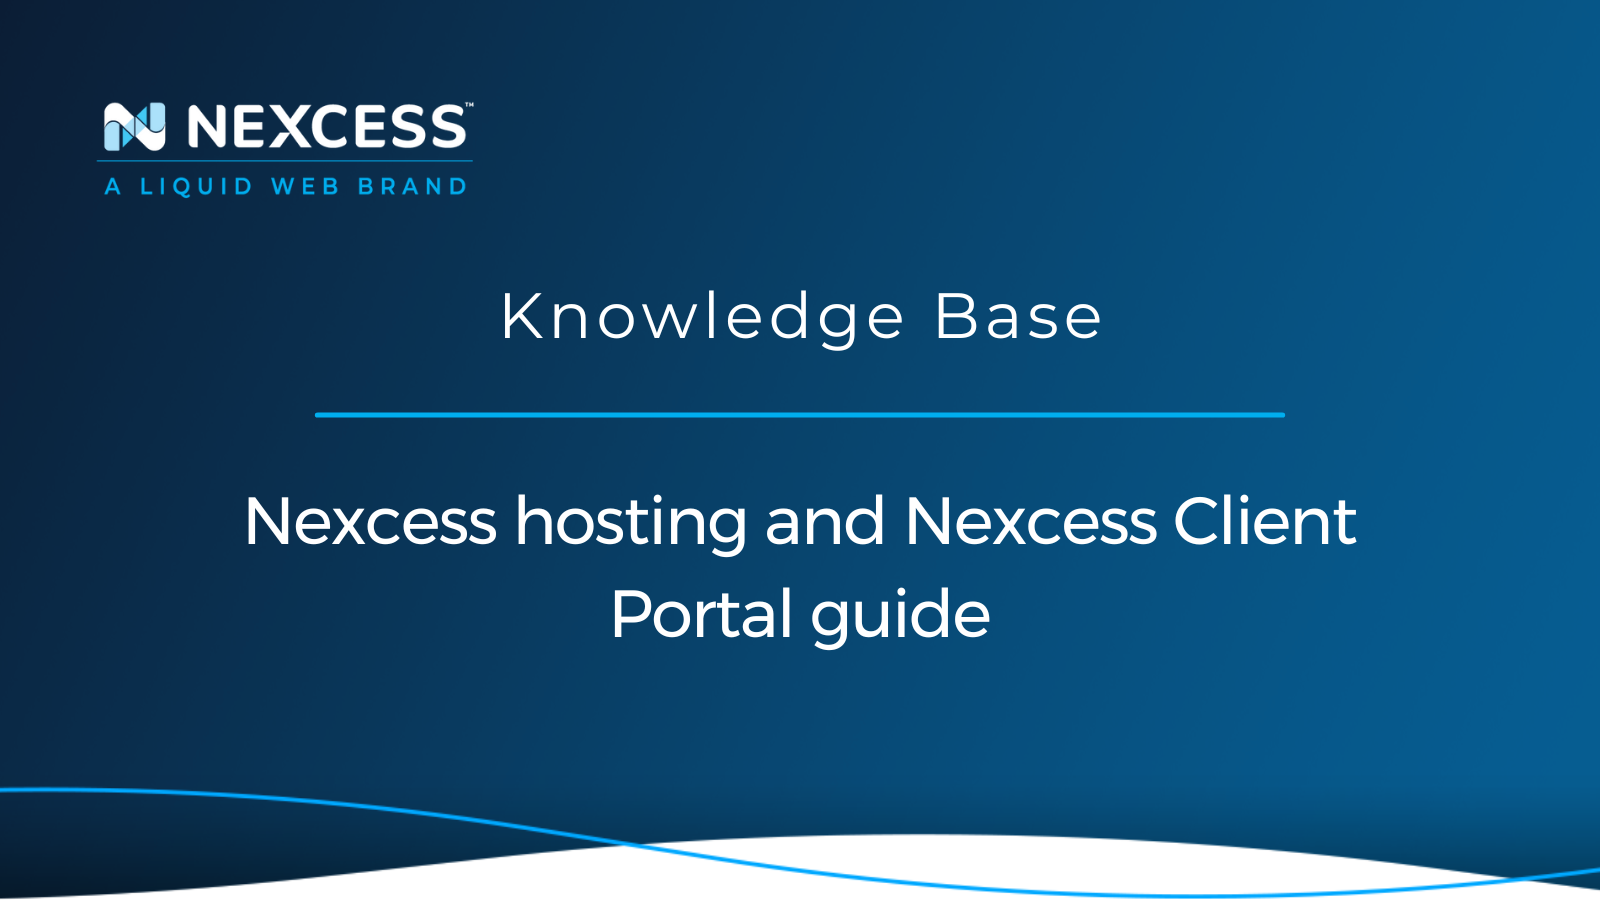 Nexcess hosting and Nexcess Client Portal guide